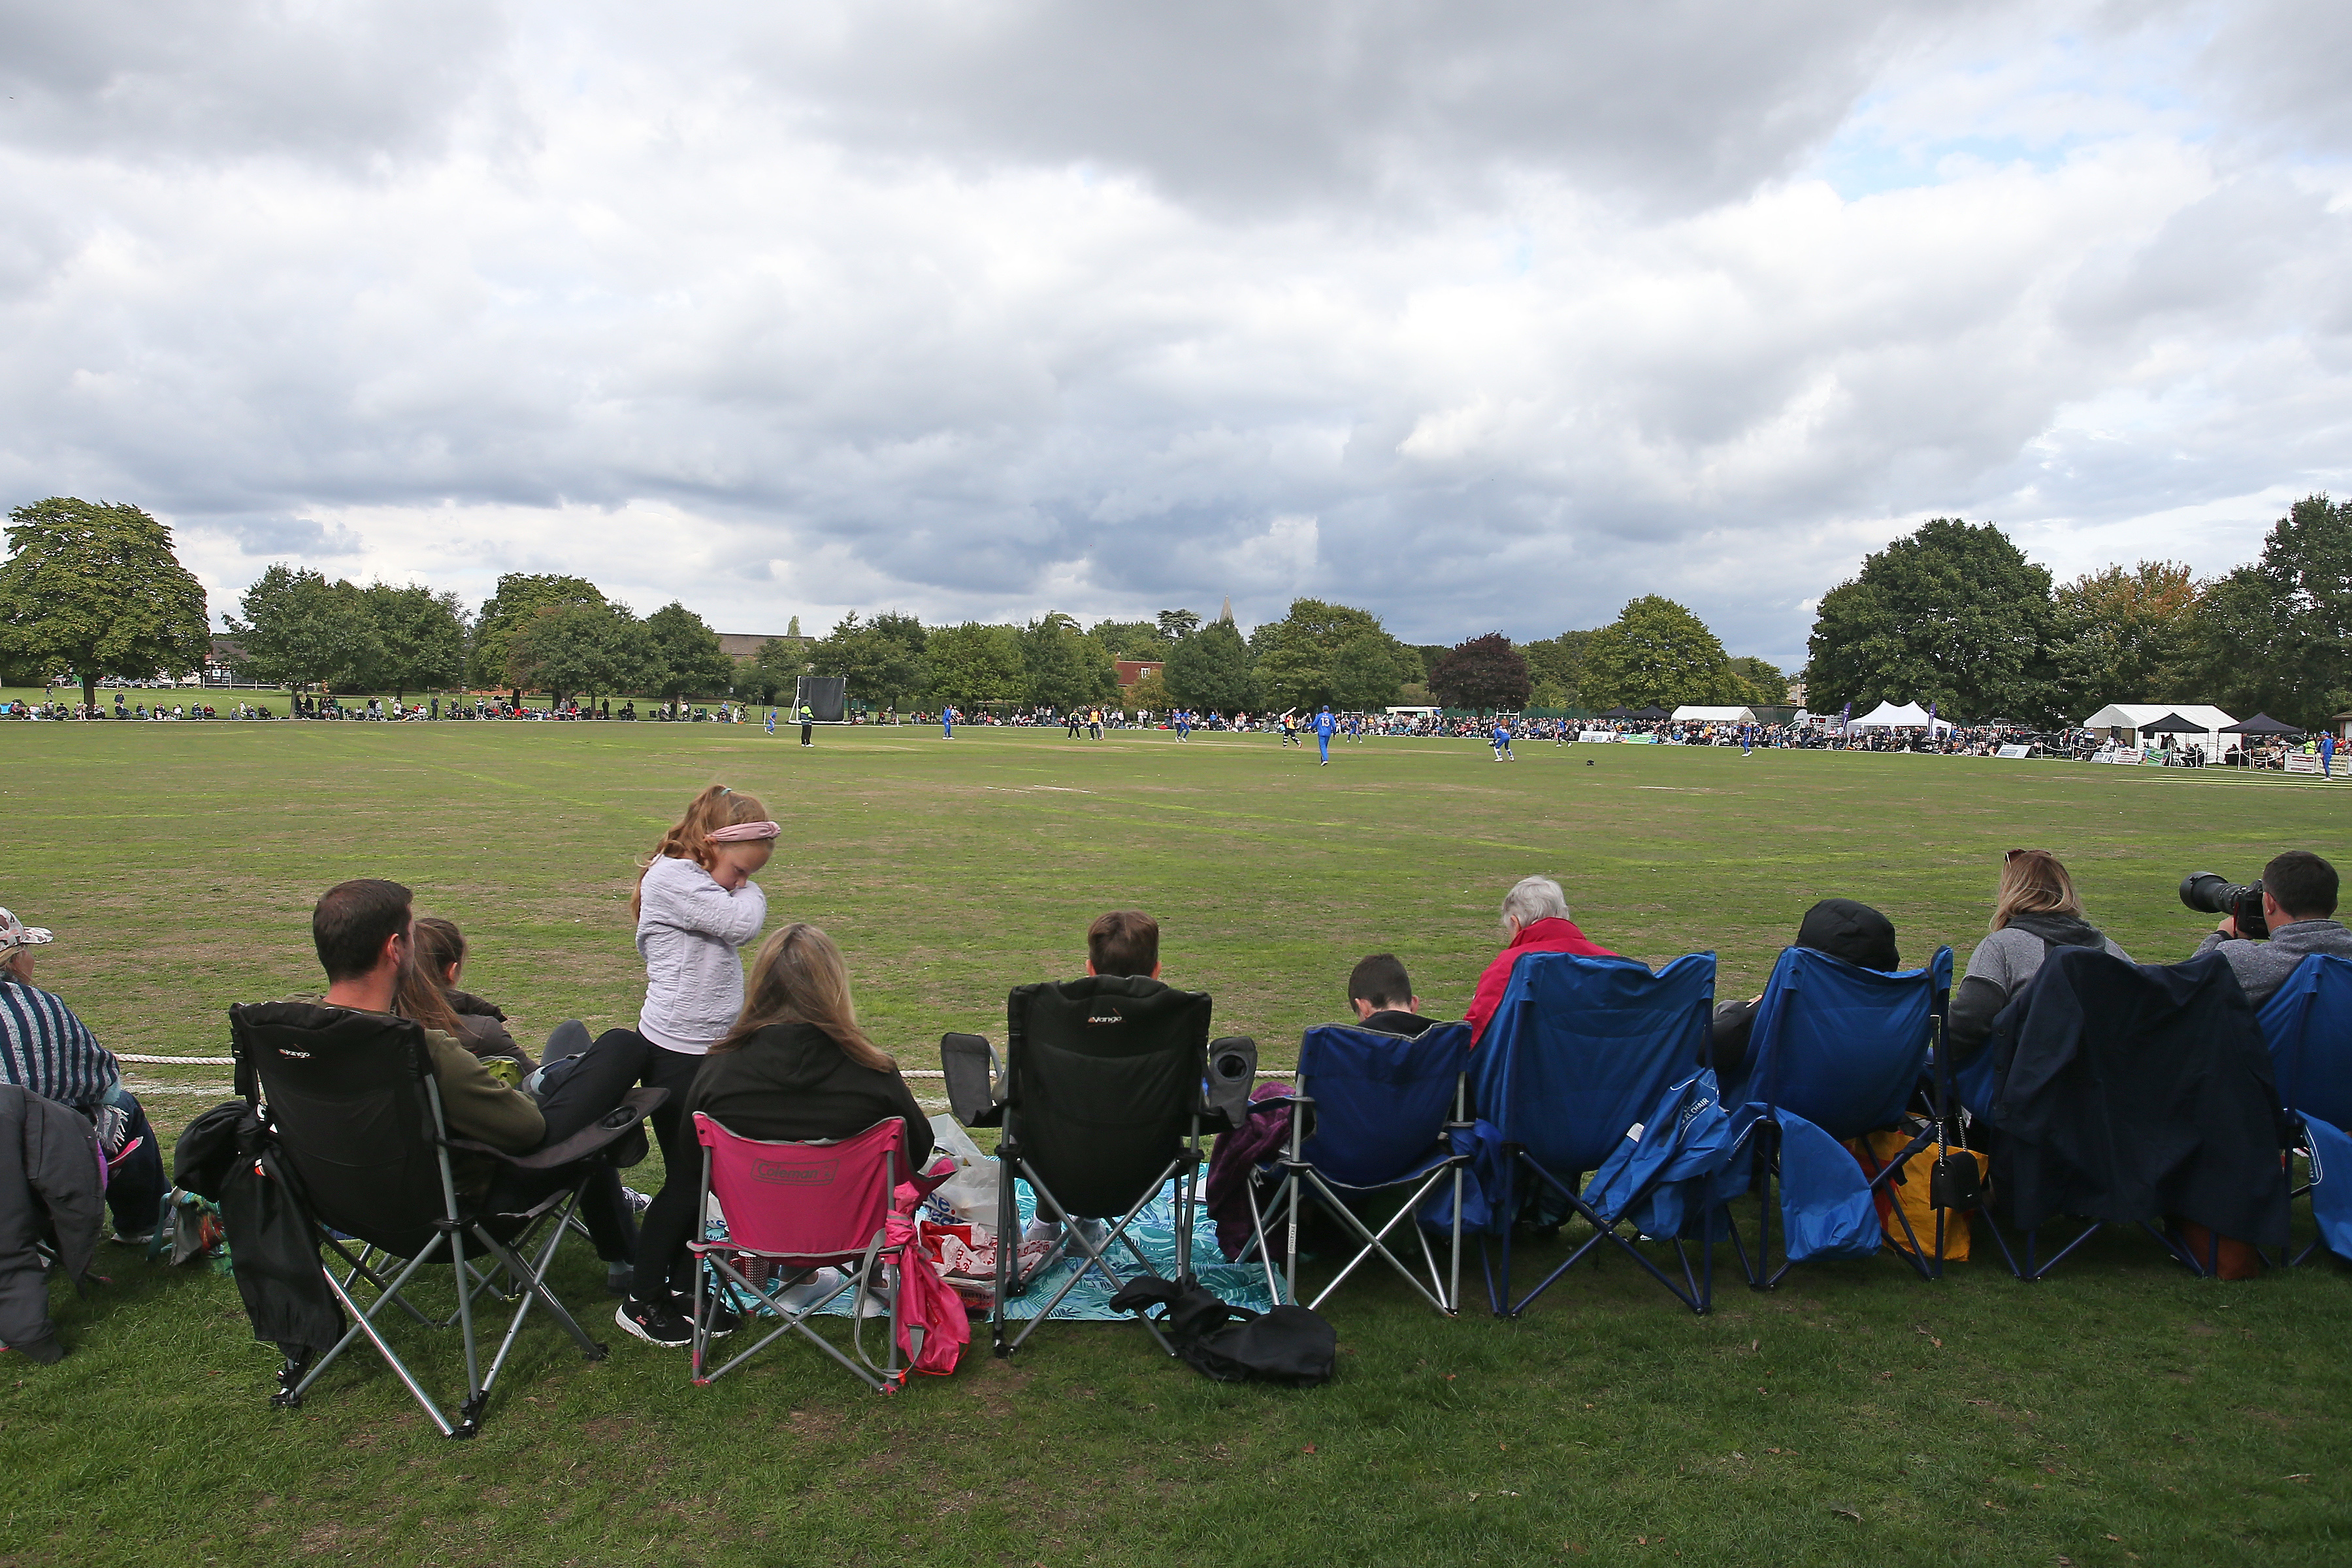 Upminster CC vs Essex CCC, Benefit Match, Cricket, Upminster Park, Upminster, Essex, United Kingdom – 18 Sep 2022